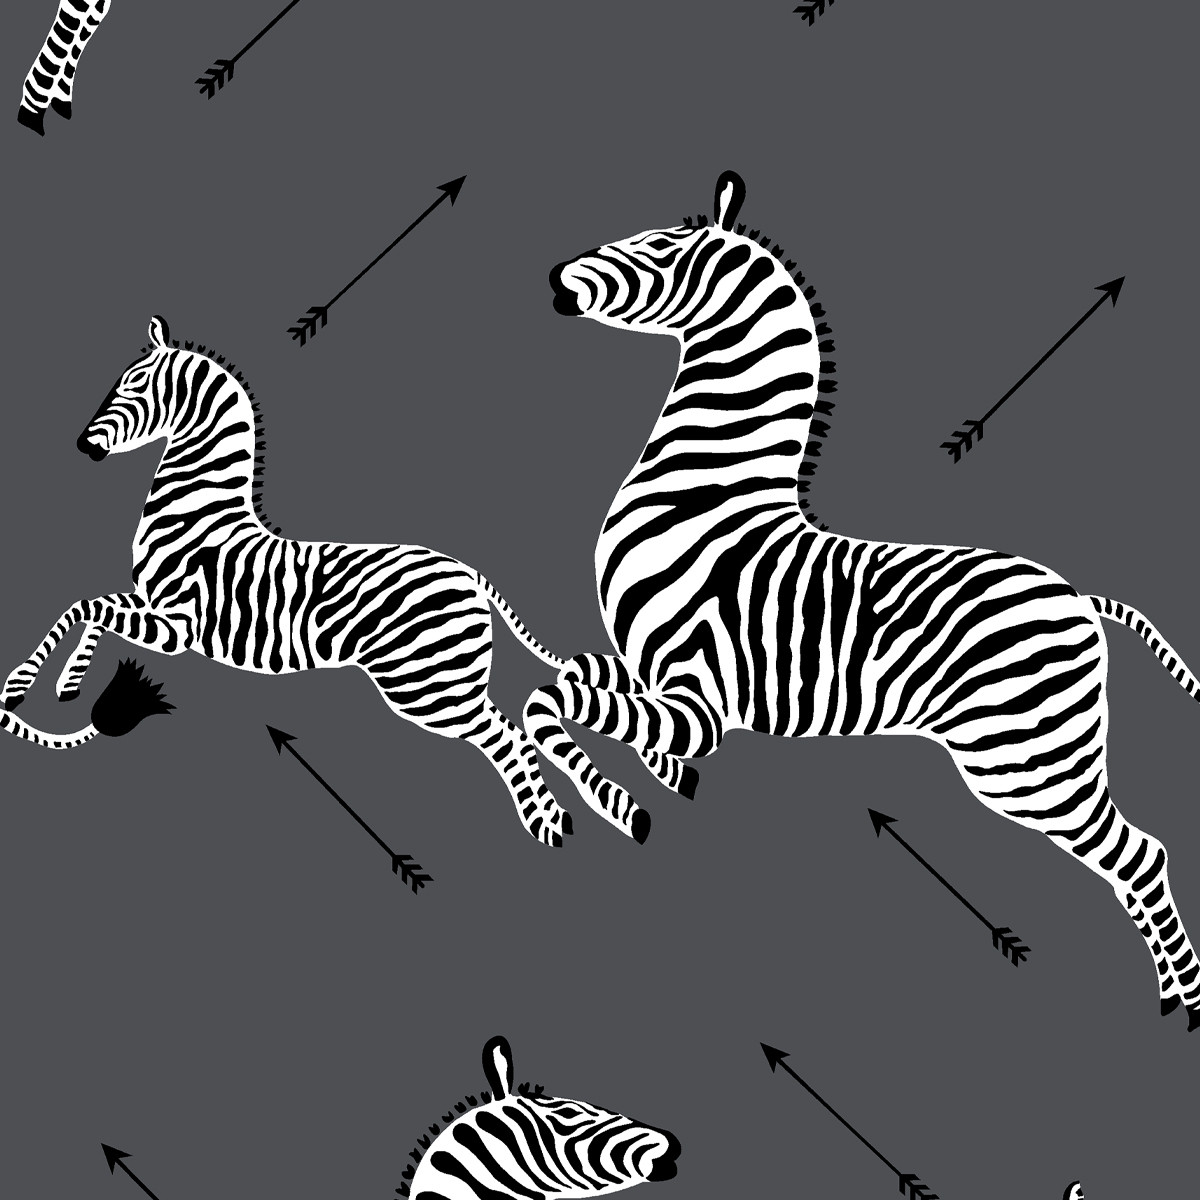 Wes Anderson Wallpaper Zebra - HD Wallpaper 